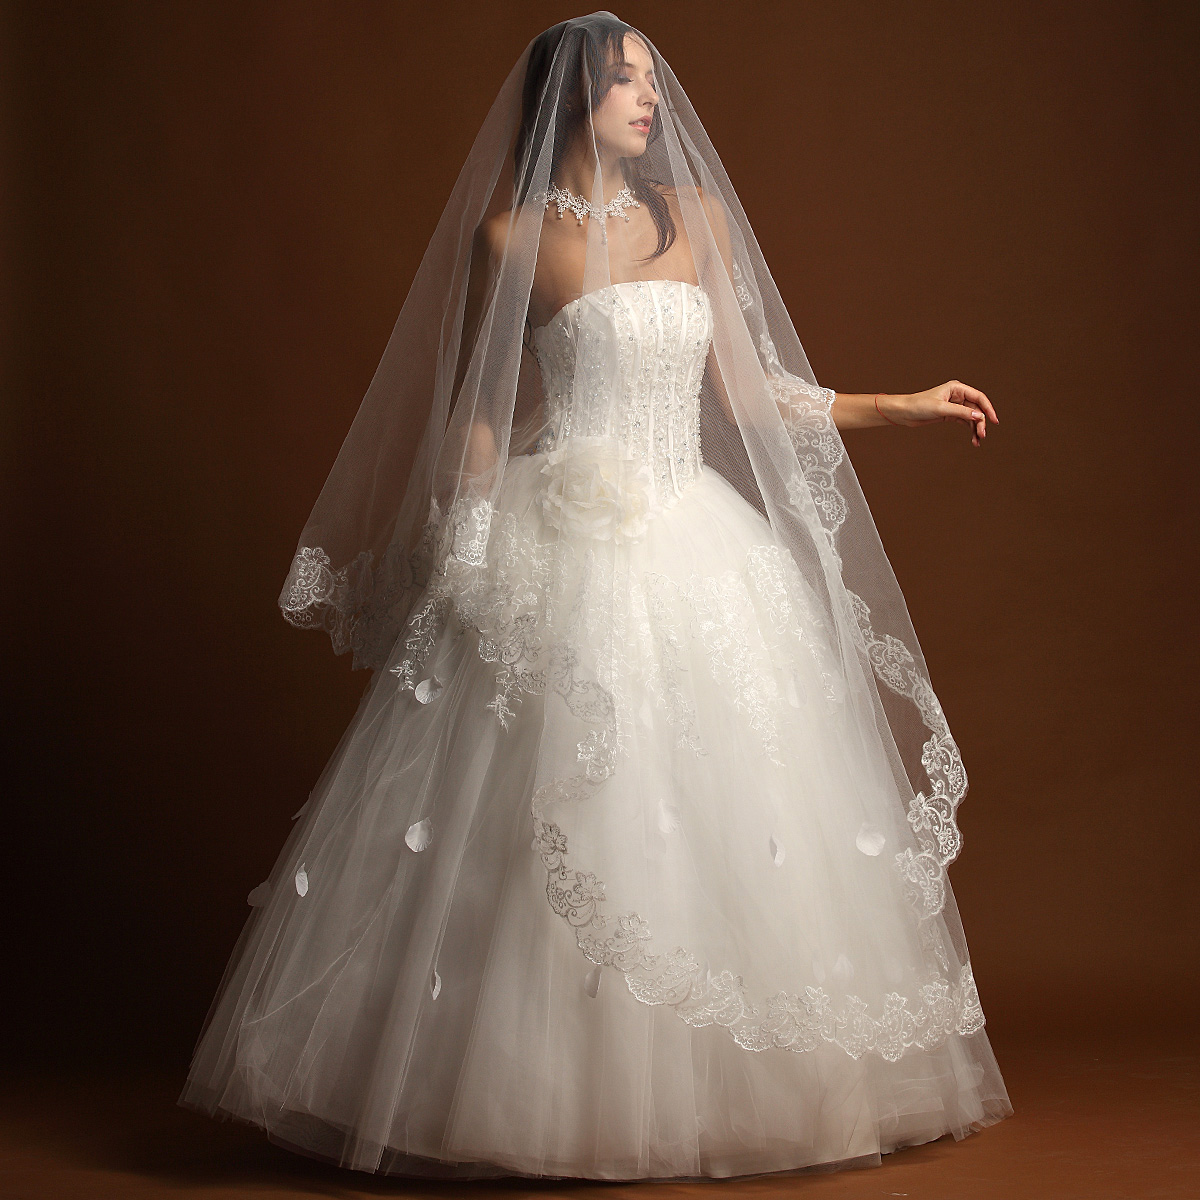 Nampula high quality 3 meters ultra long design long trailing the bride wedding dress veil p20818 zyn